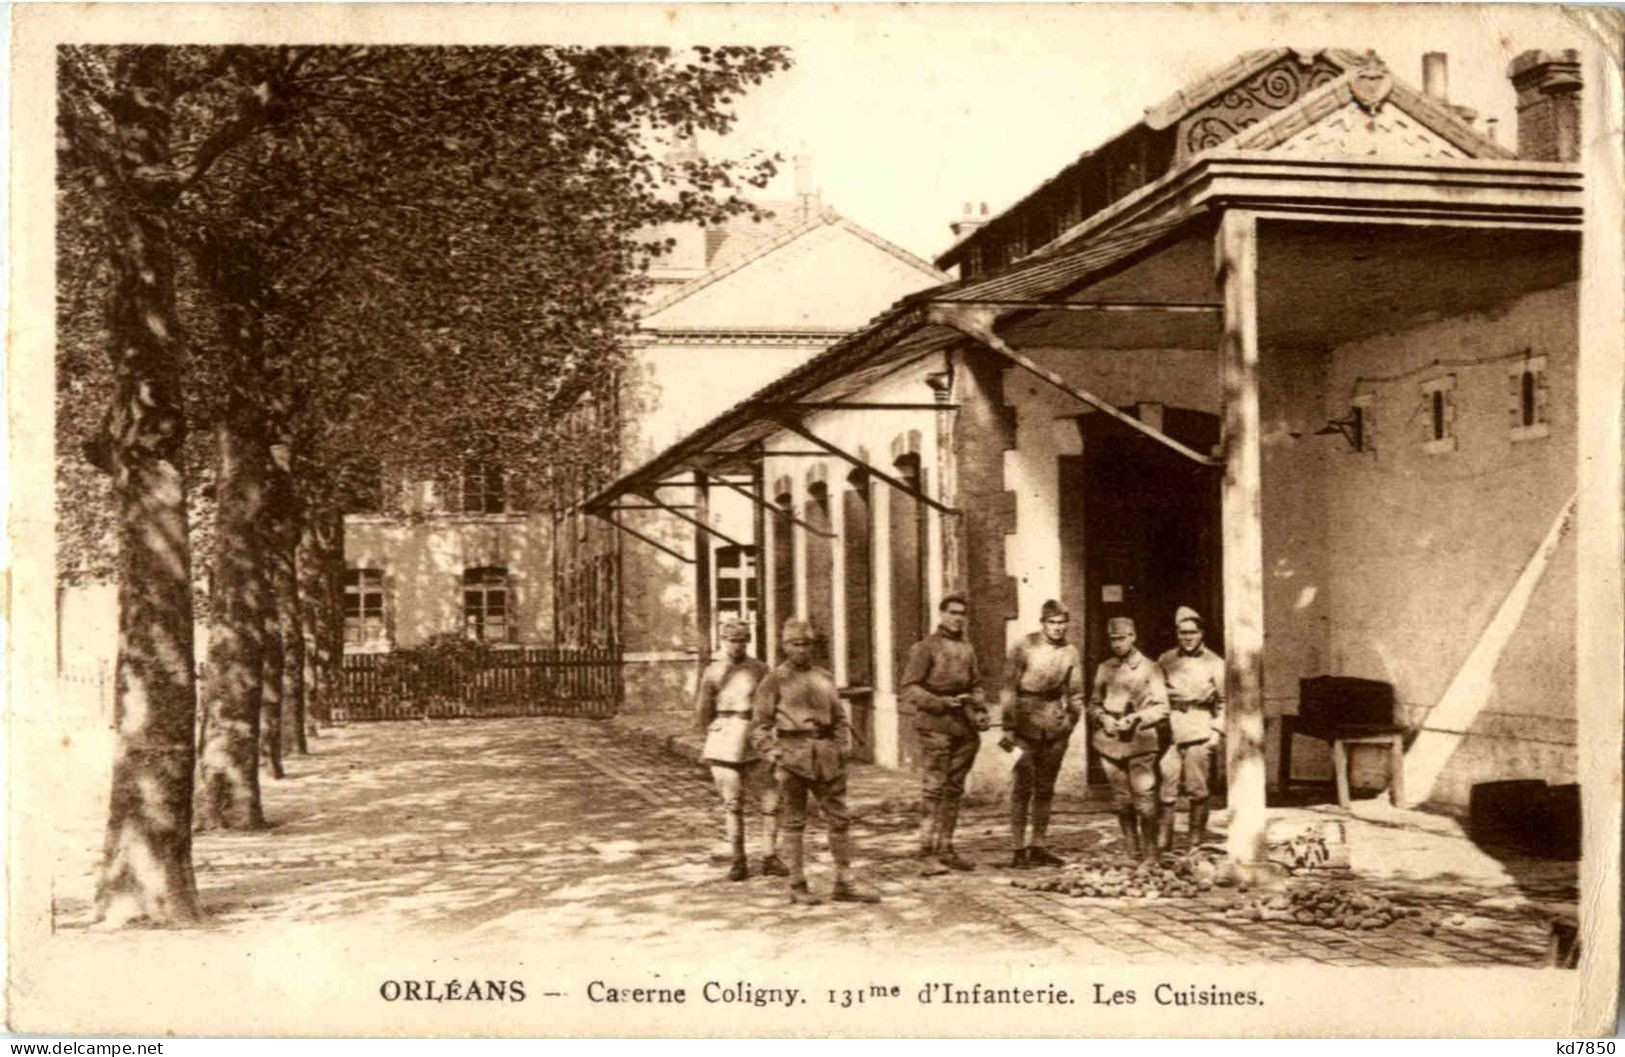 Orleans - Orleans